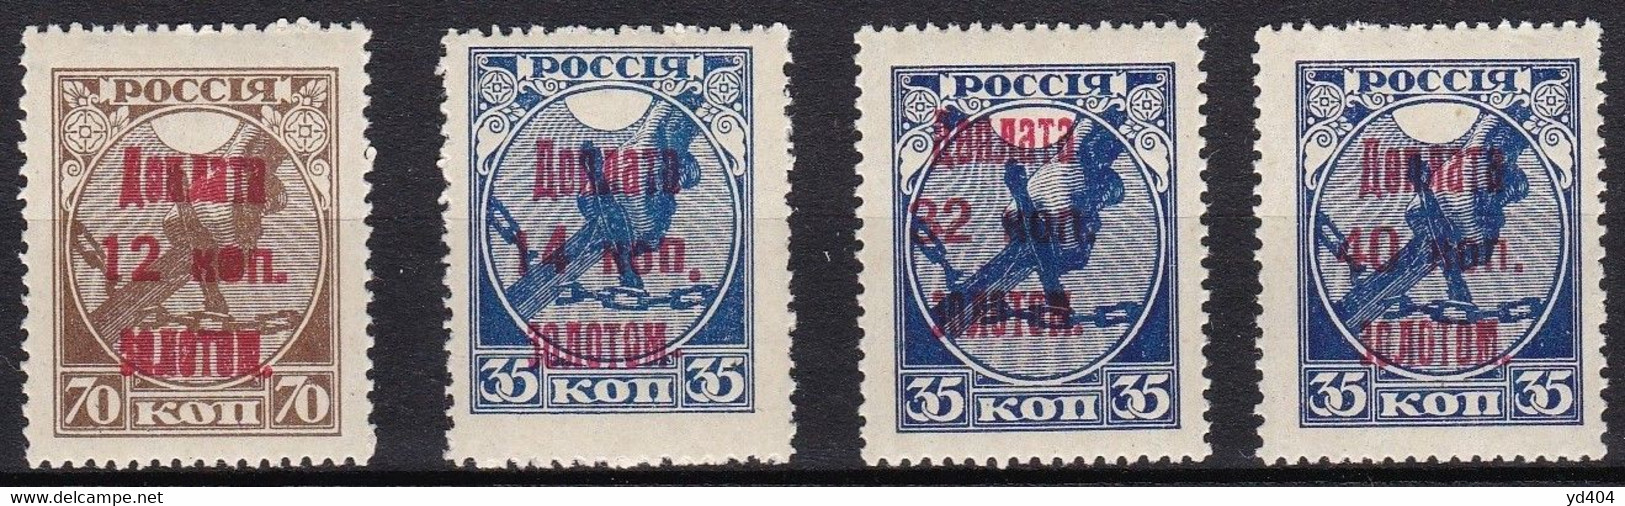 RU540 – USSR – POSTAGE DUE - 1924 – POSTAGE STAMPS OVERPRINTED – MI # 6/9 MVLH 8 € - Postage Due